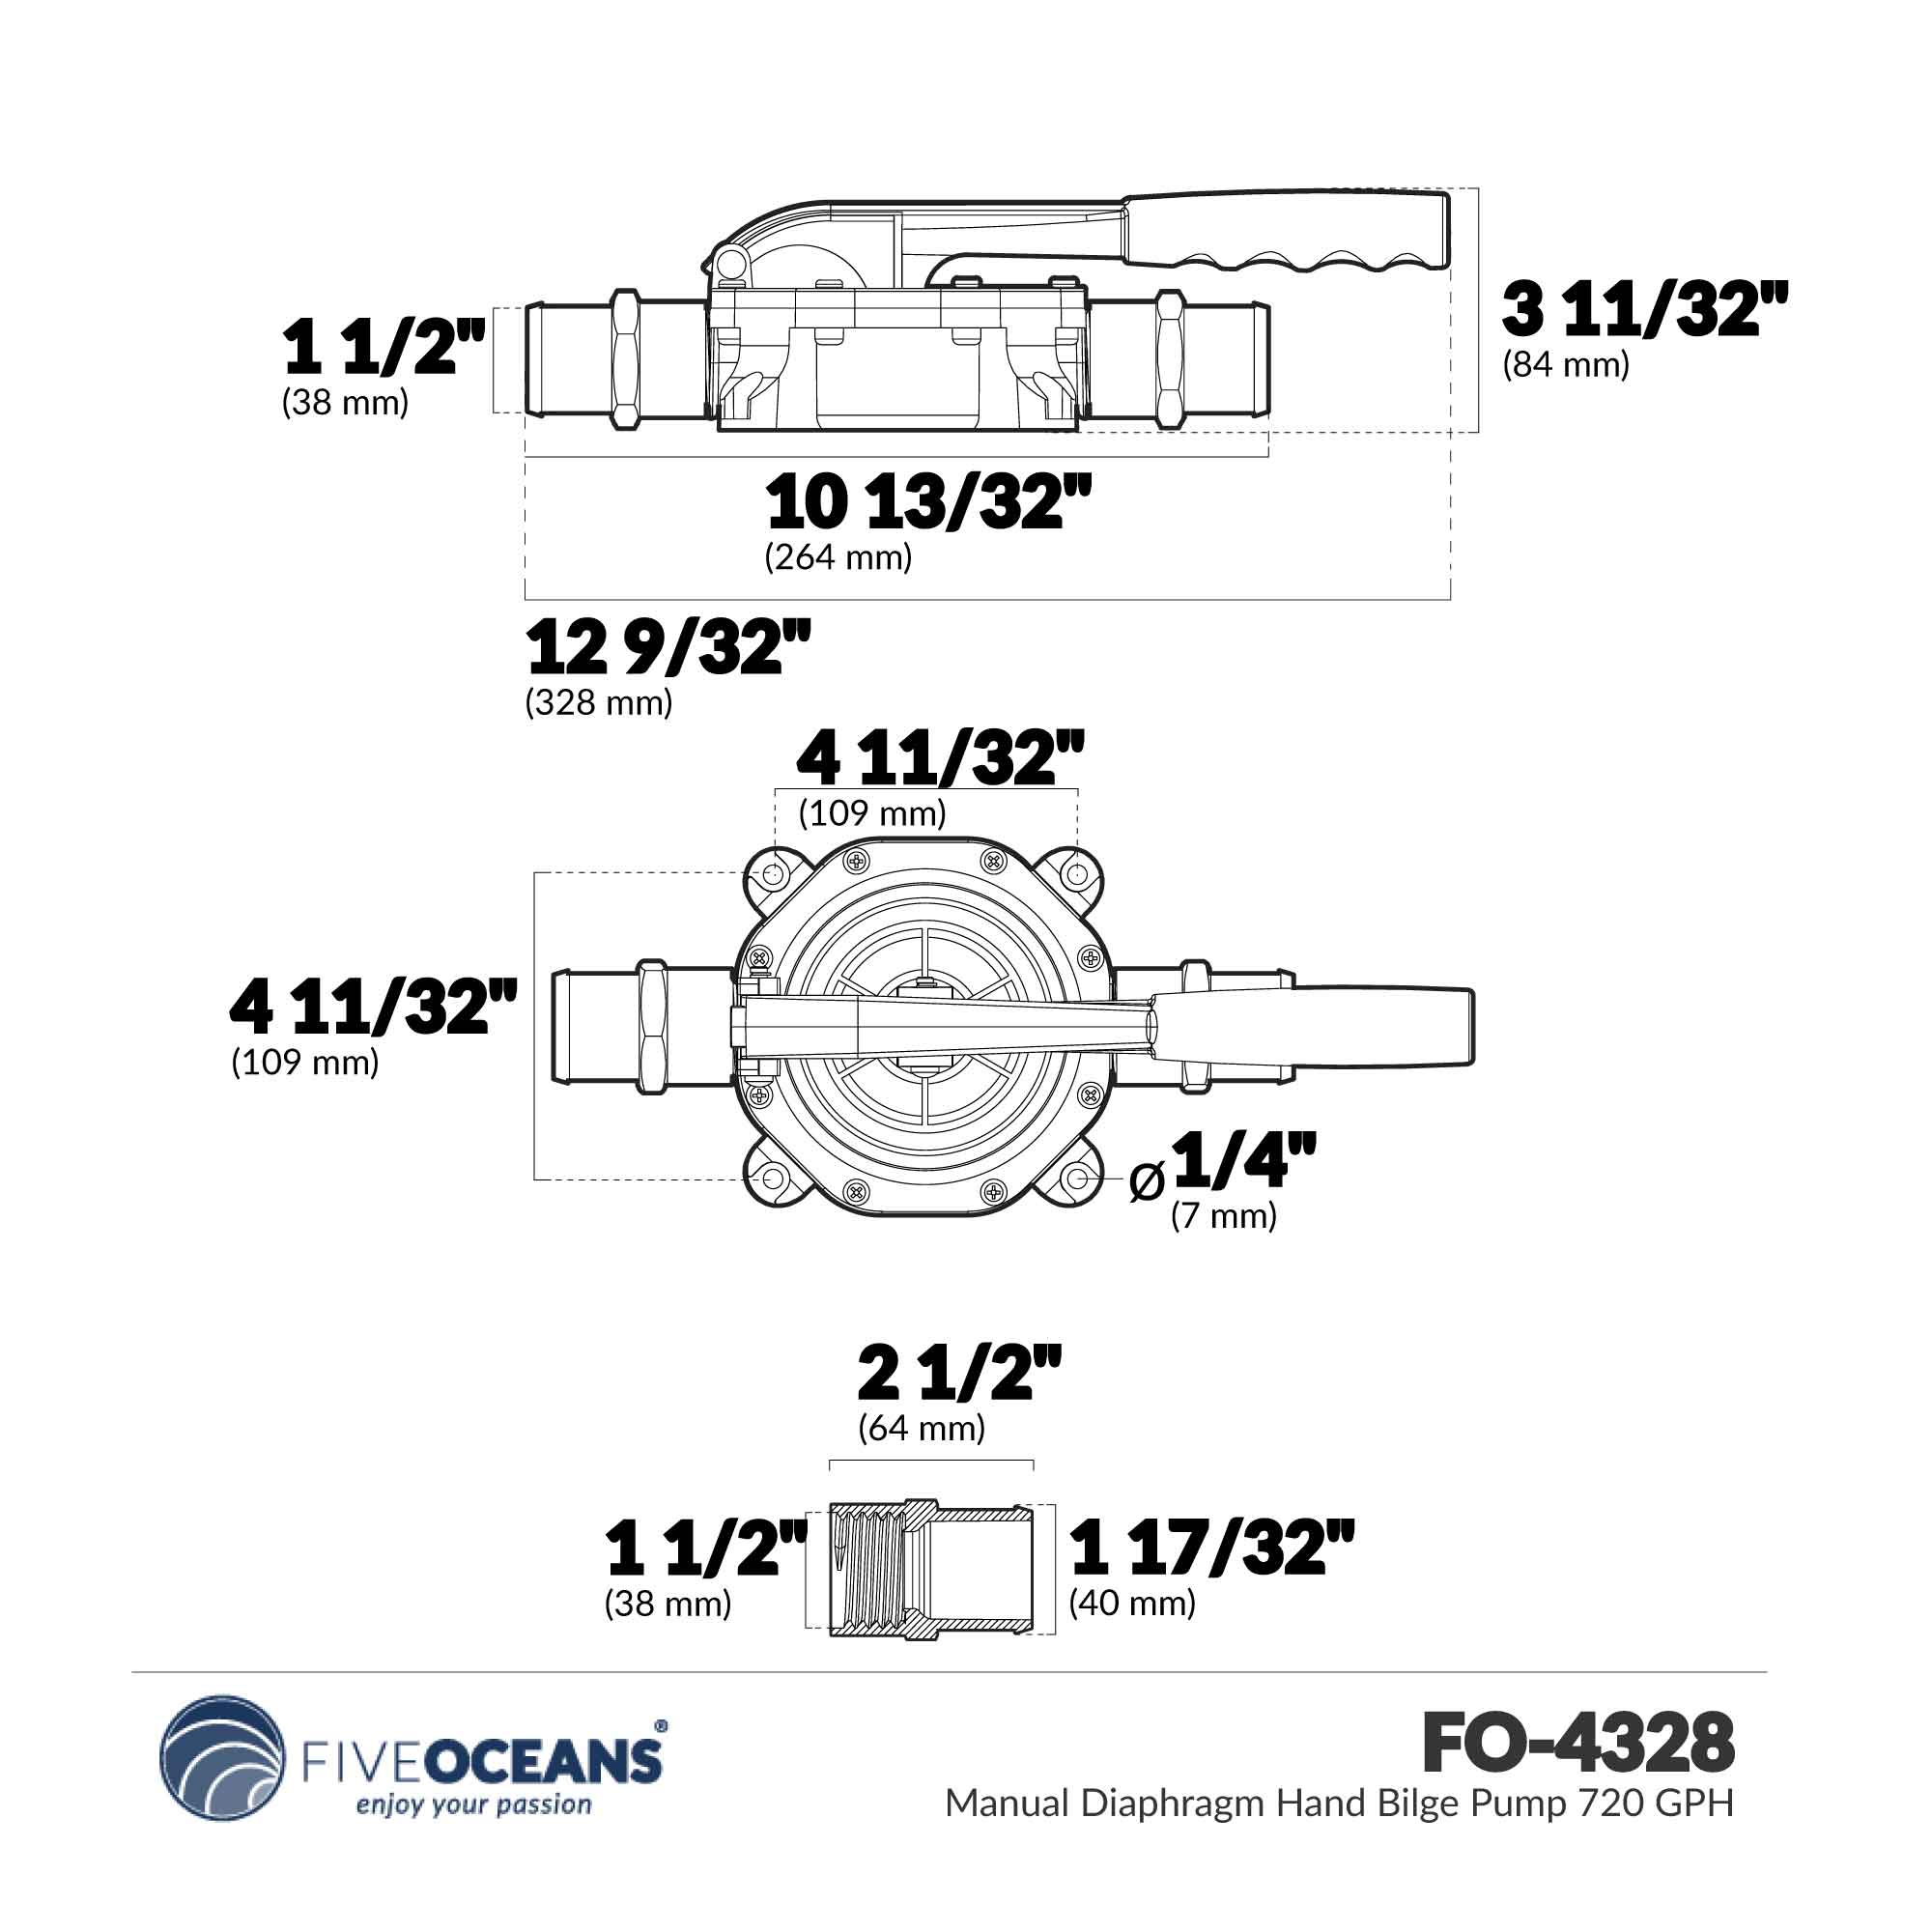 Manual Diaphragm Hand Bilge Pump 720 GPH - FO4328